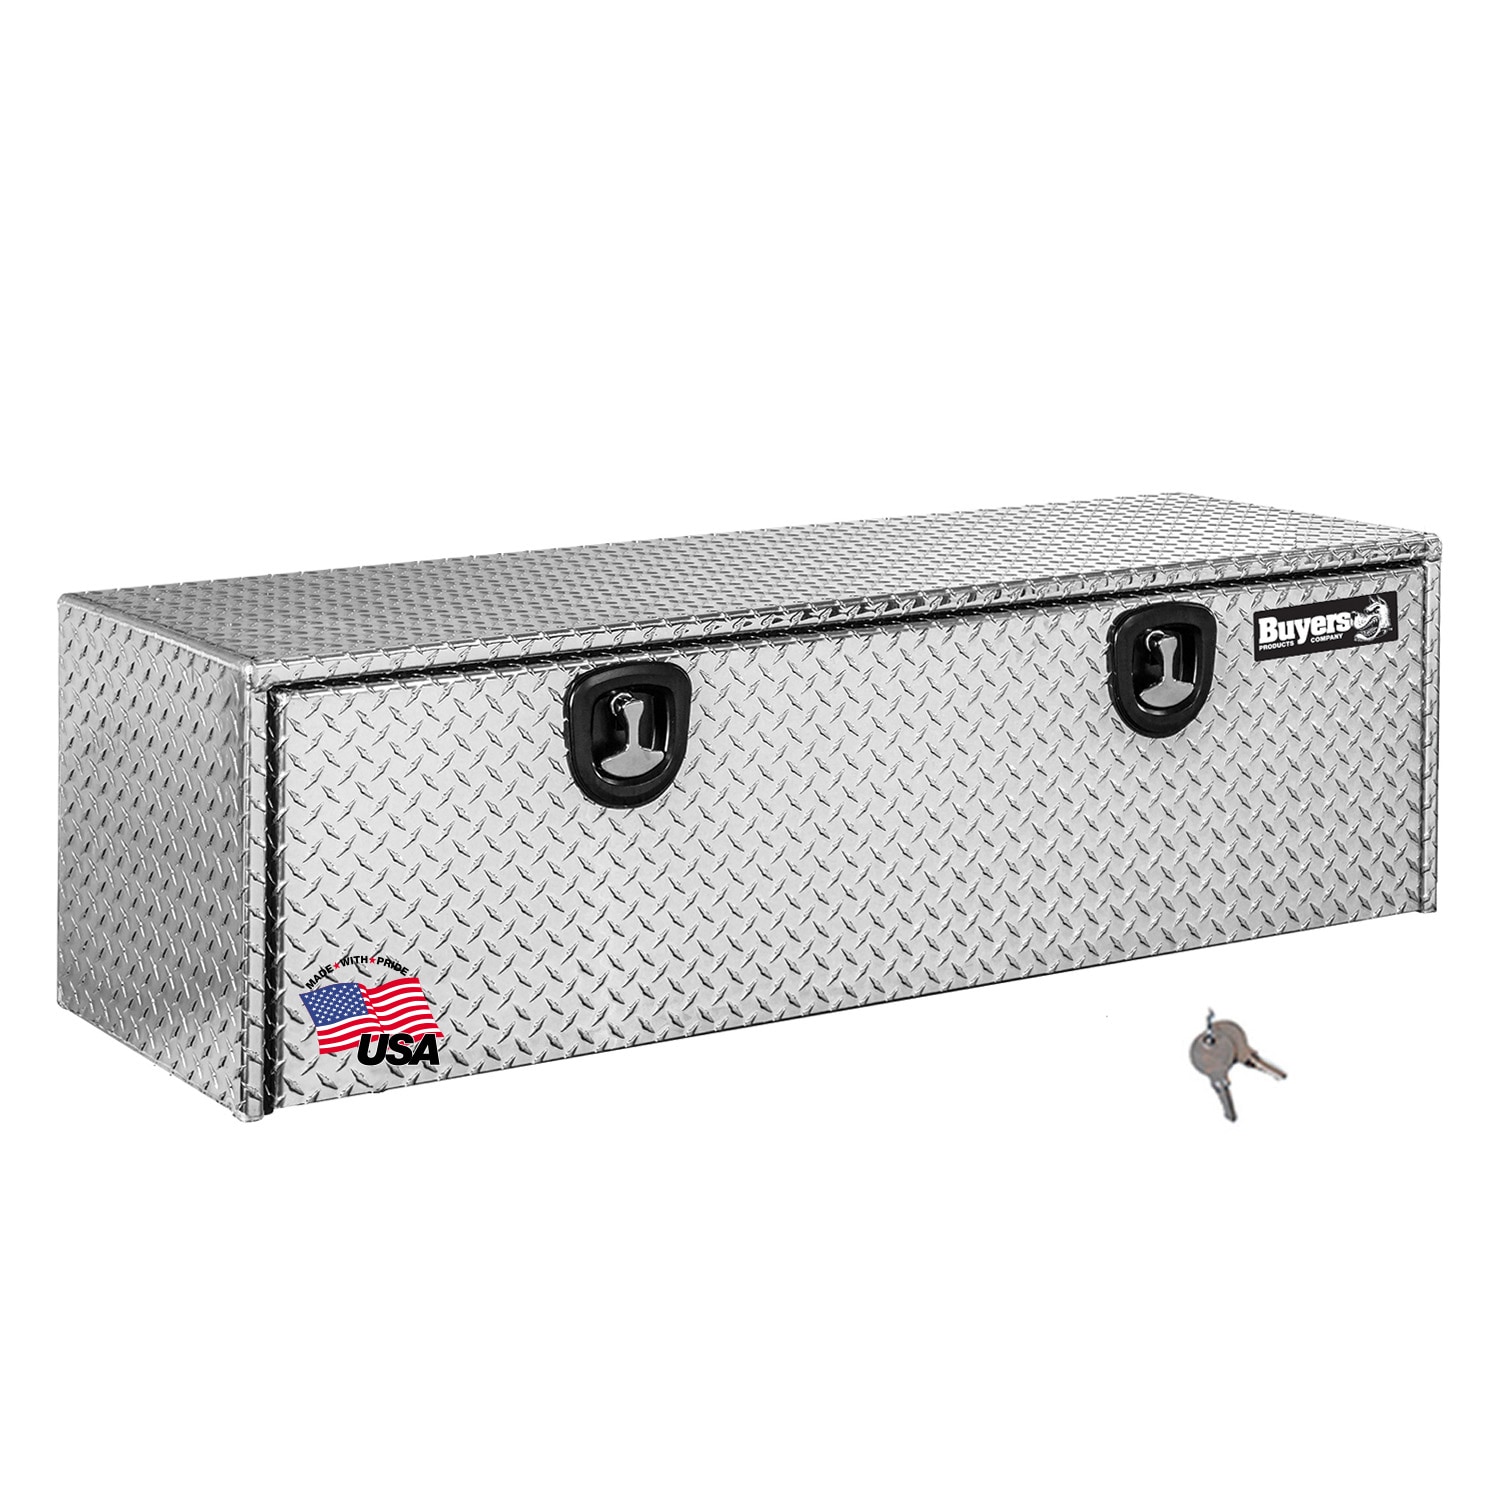 Buyers Products 1705145 | 24 x 24 x 60 Diamond Tread Aluminum Underbody Truck Box